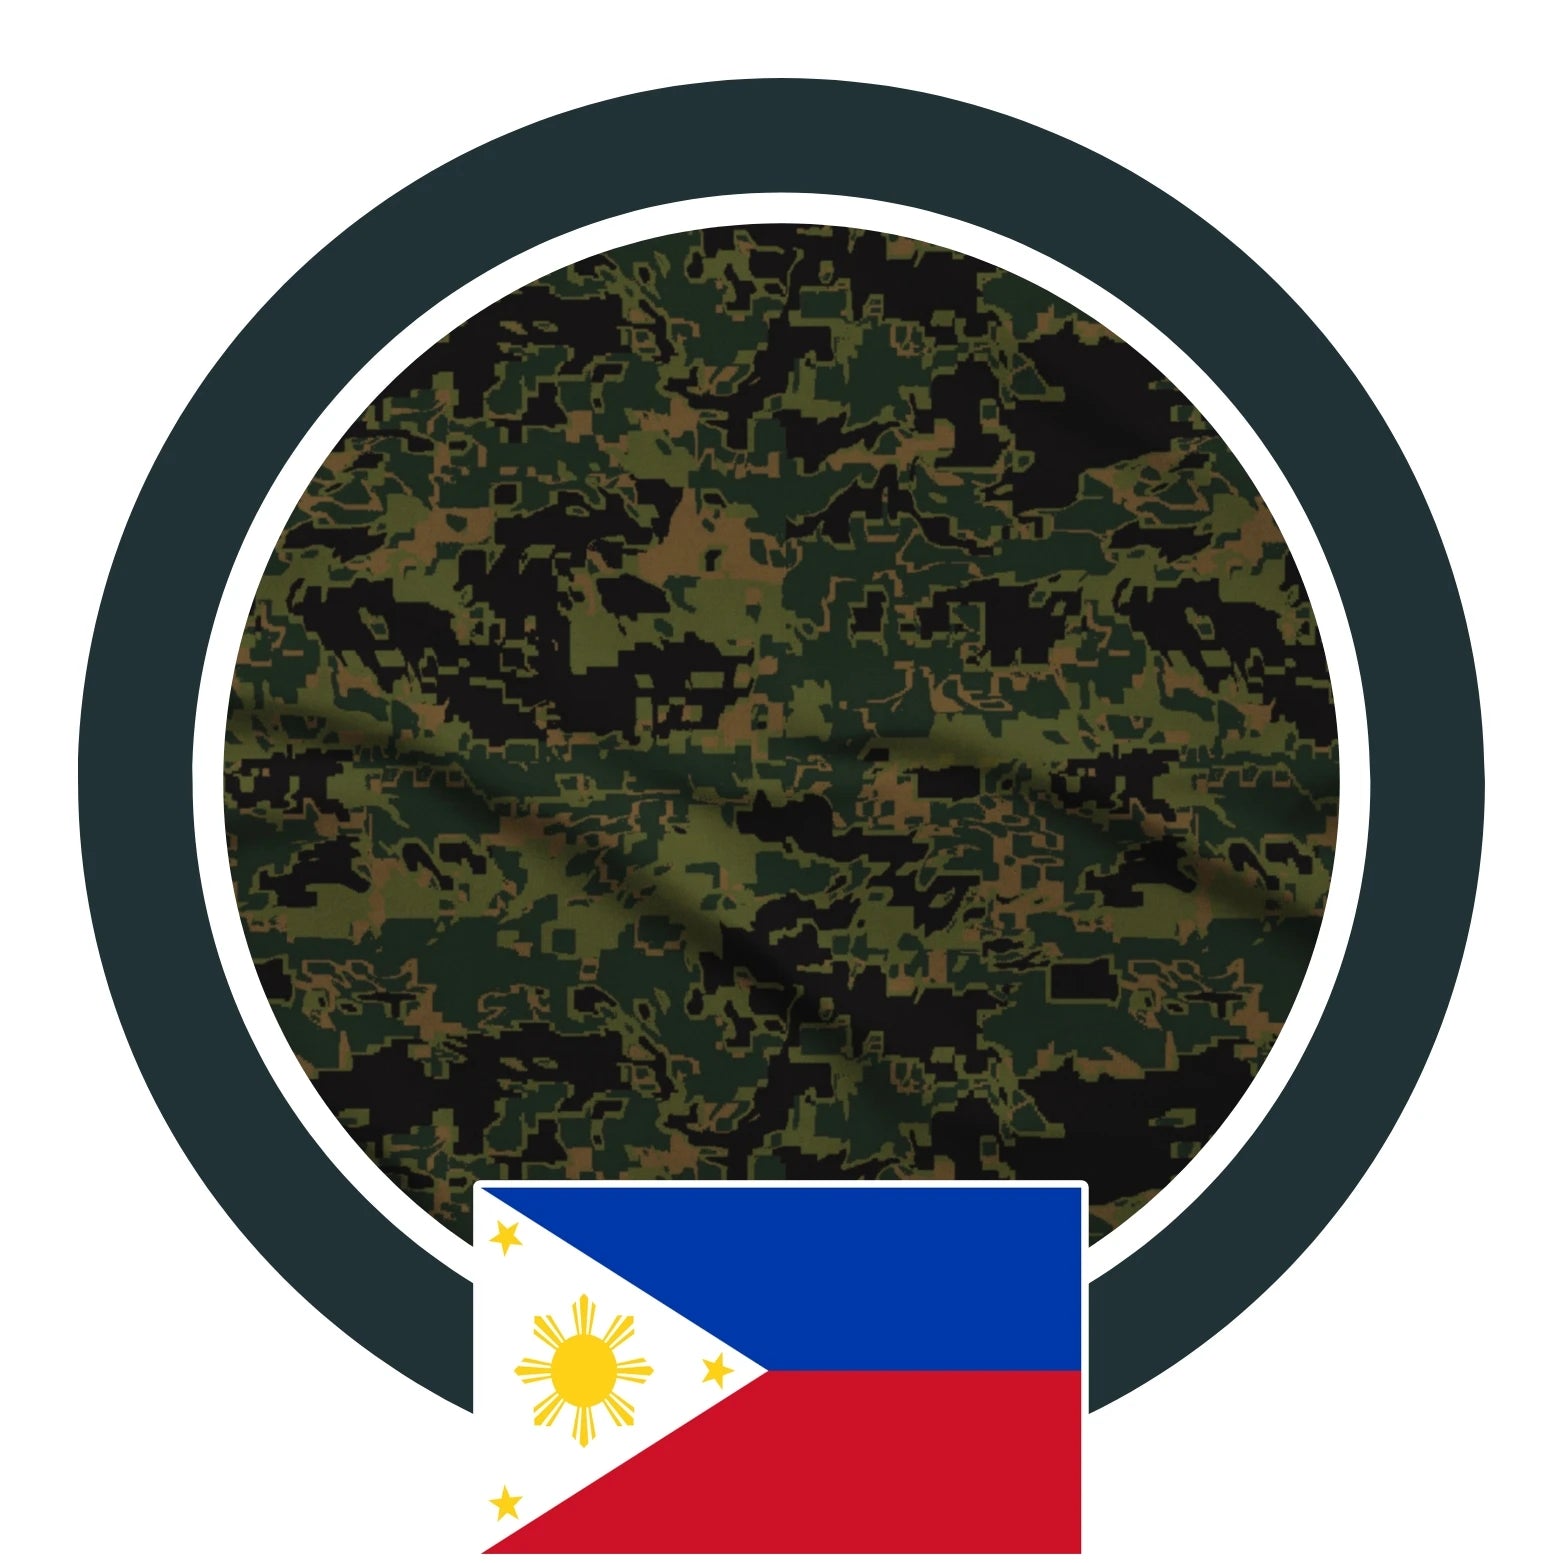 philippine army logo